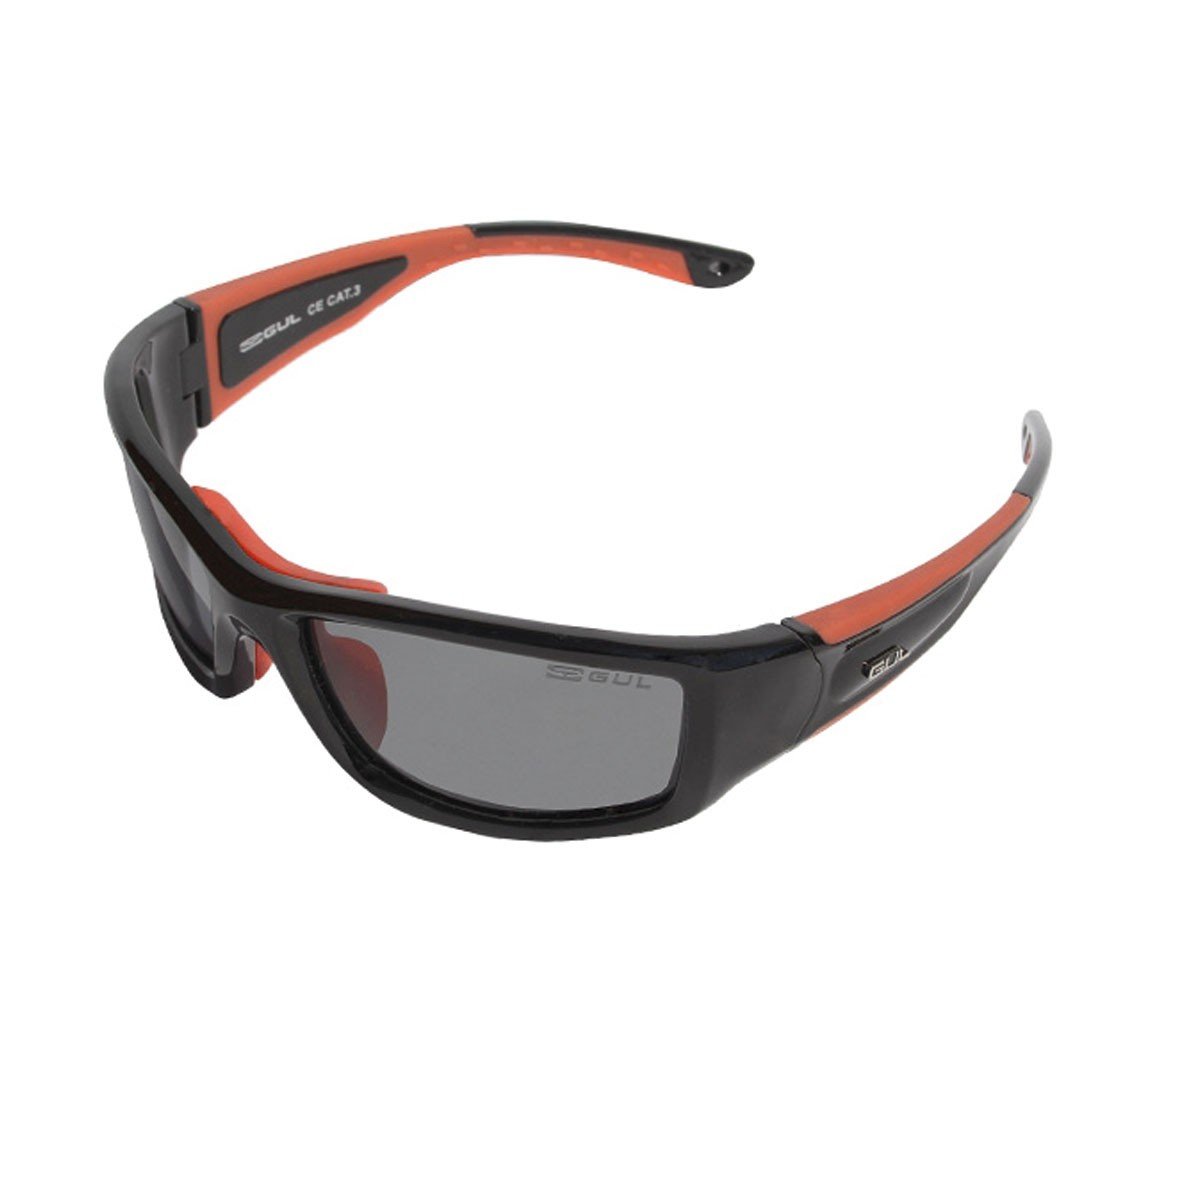 Gul Cz Pro Floating Sunglasses   Sg0001-A3